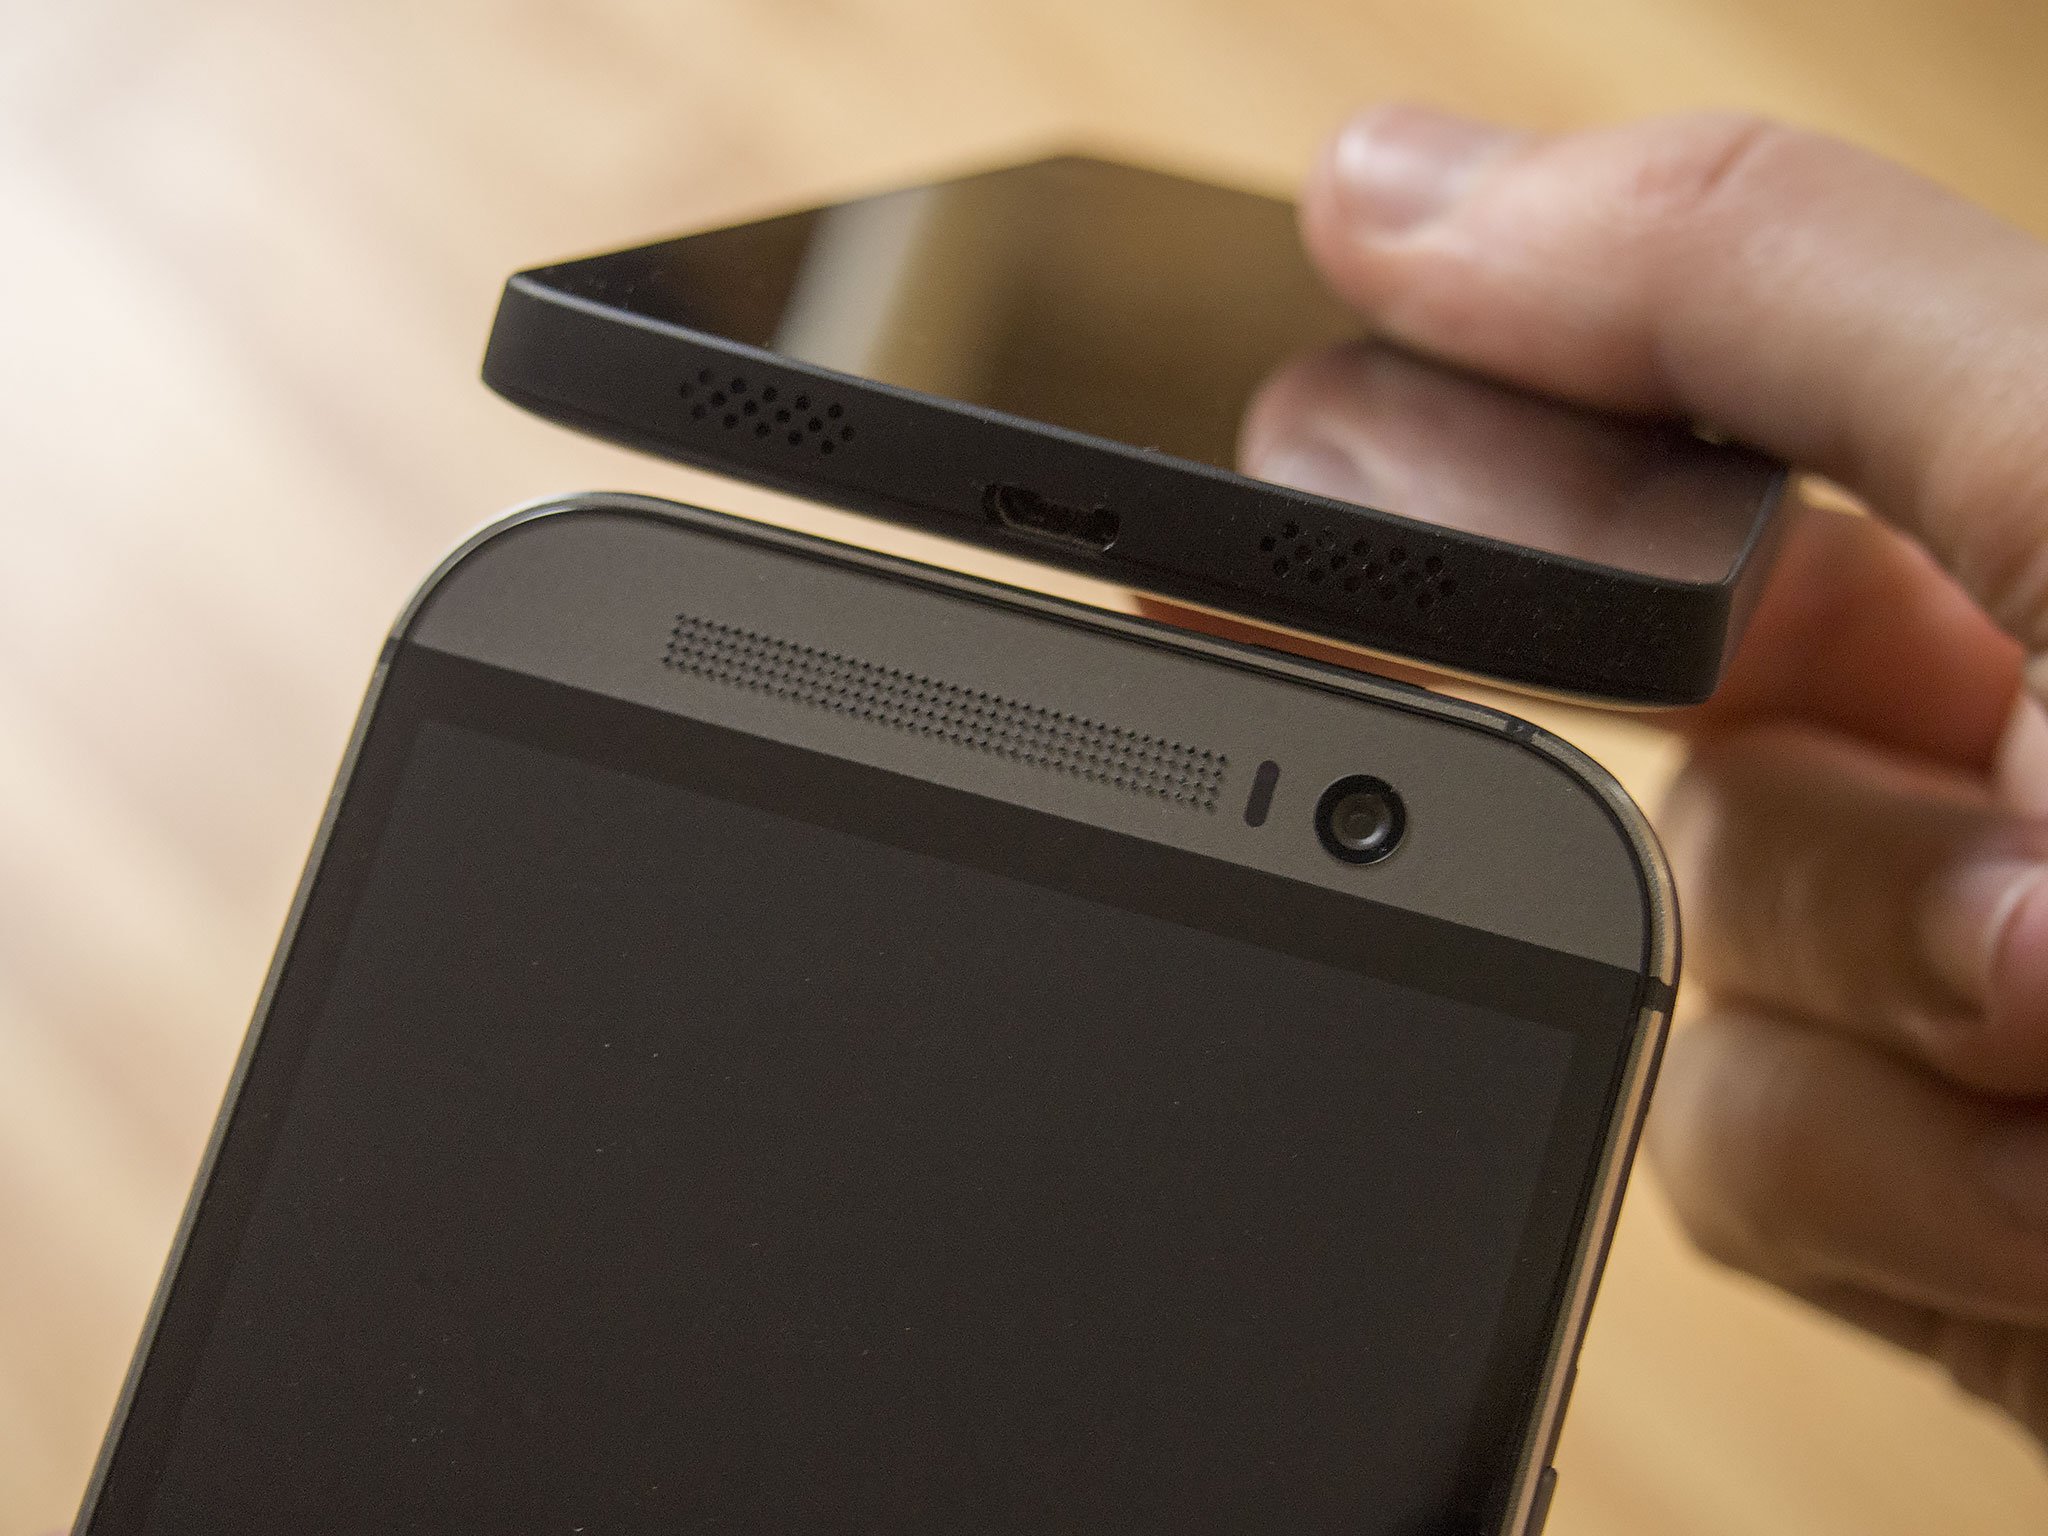 Nexus 5, HTC One M8